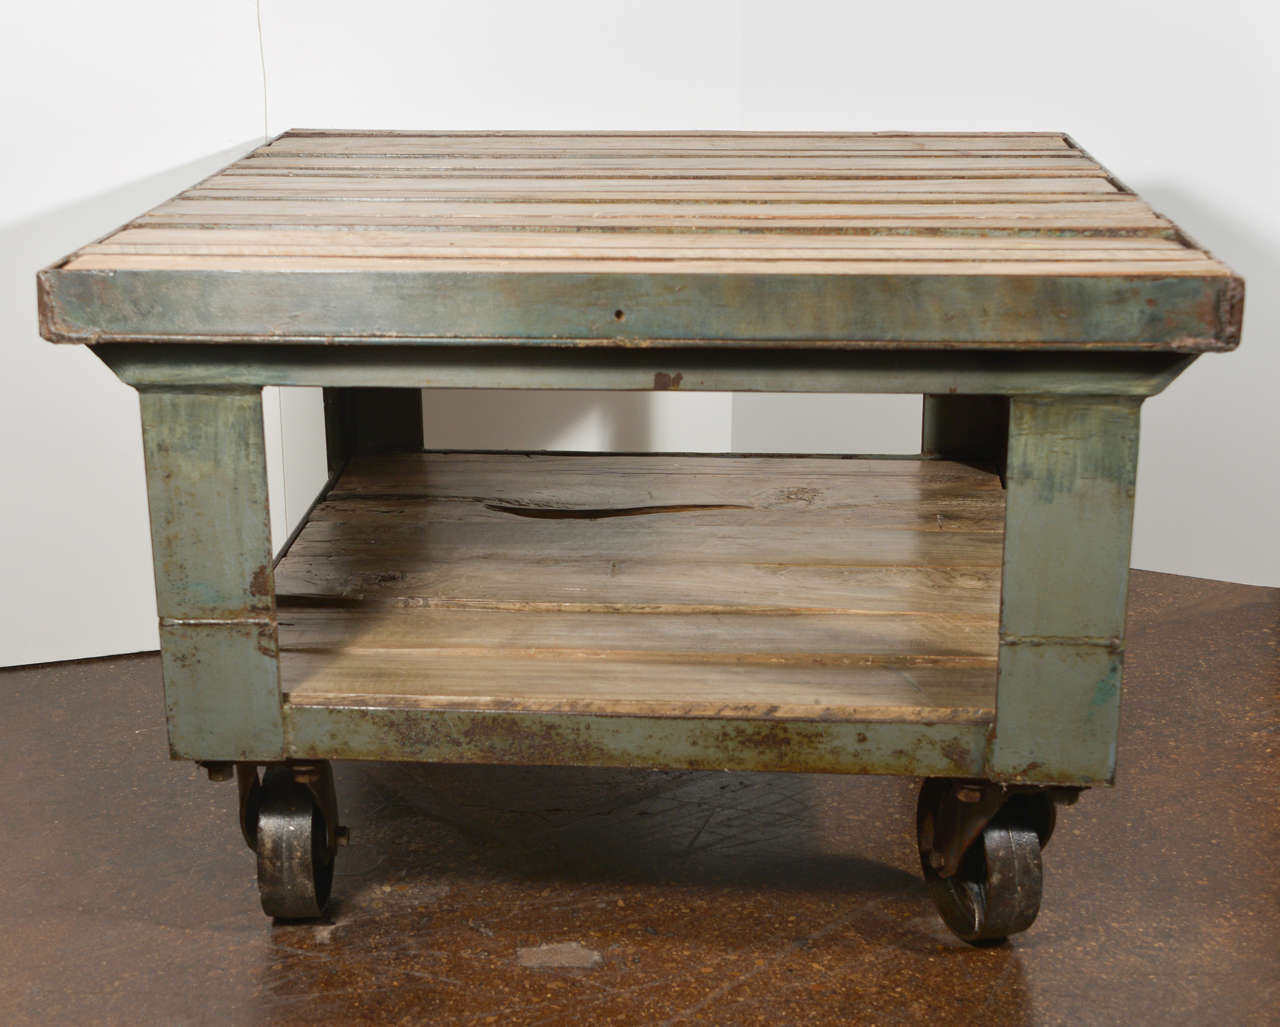 Industrial cart as end table.
Steel with bleached oak slat top.